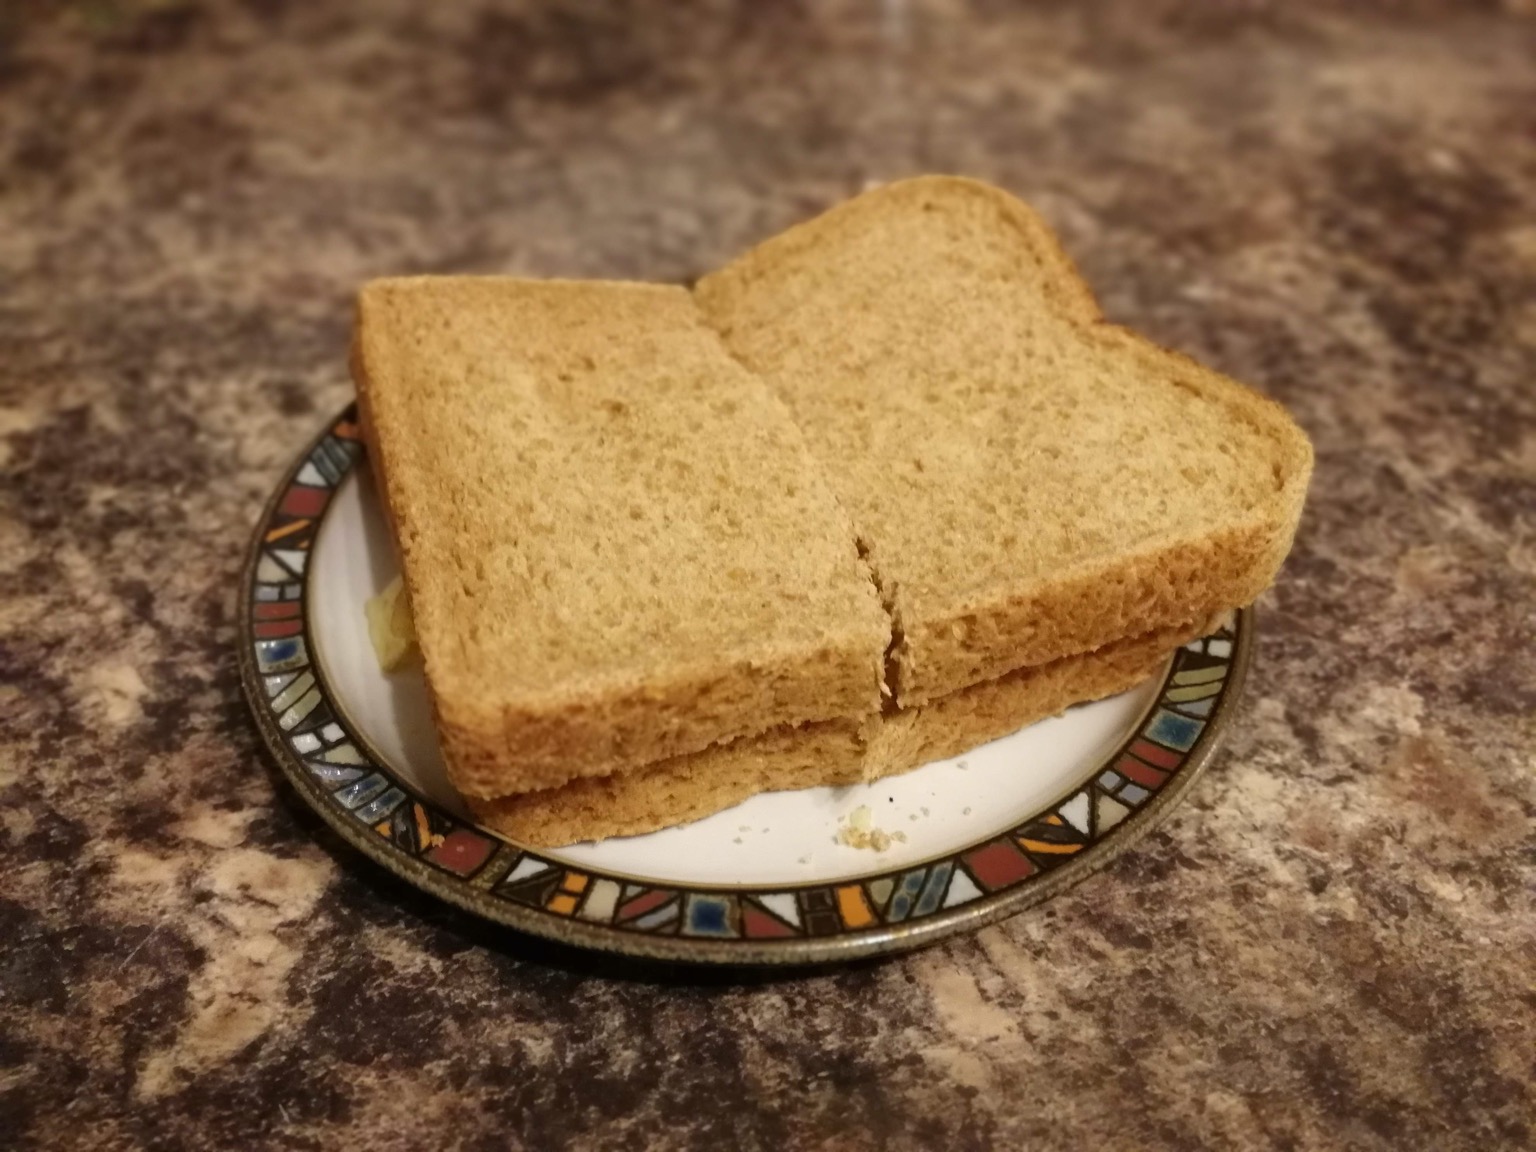 Halved brown crisp sandwich on a plate on granite